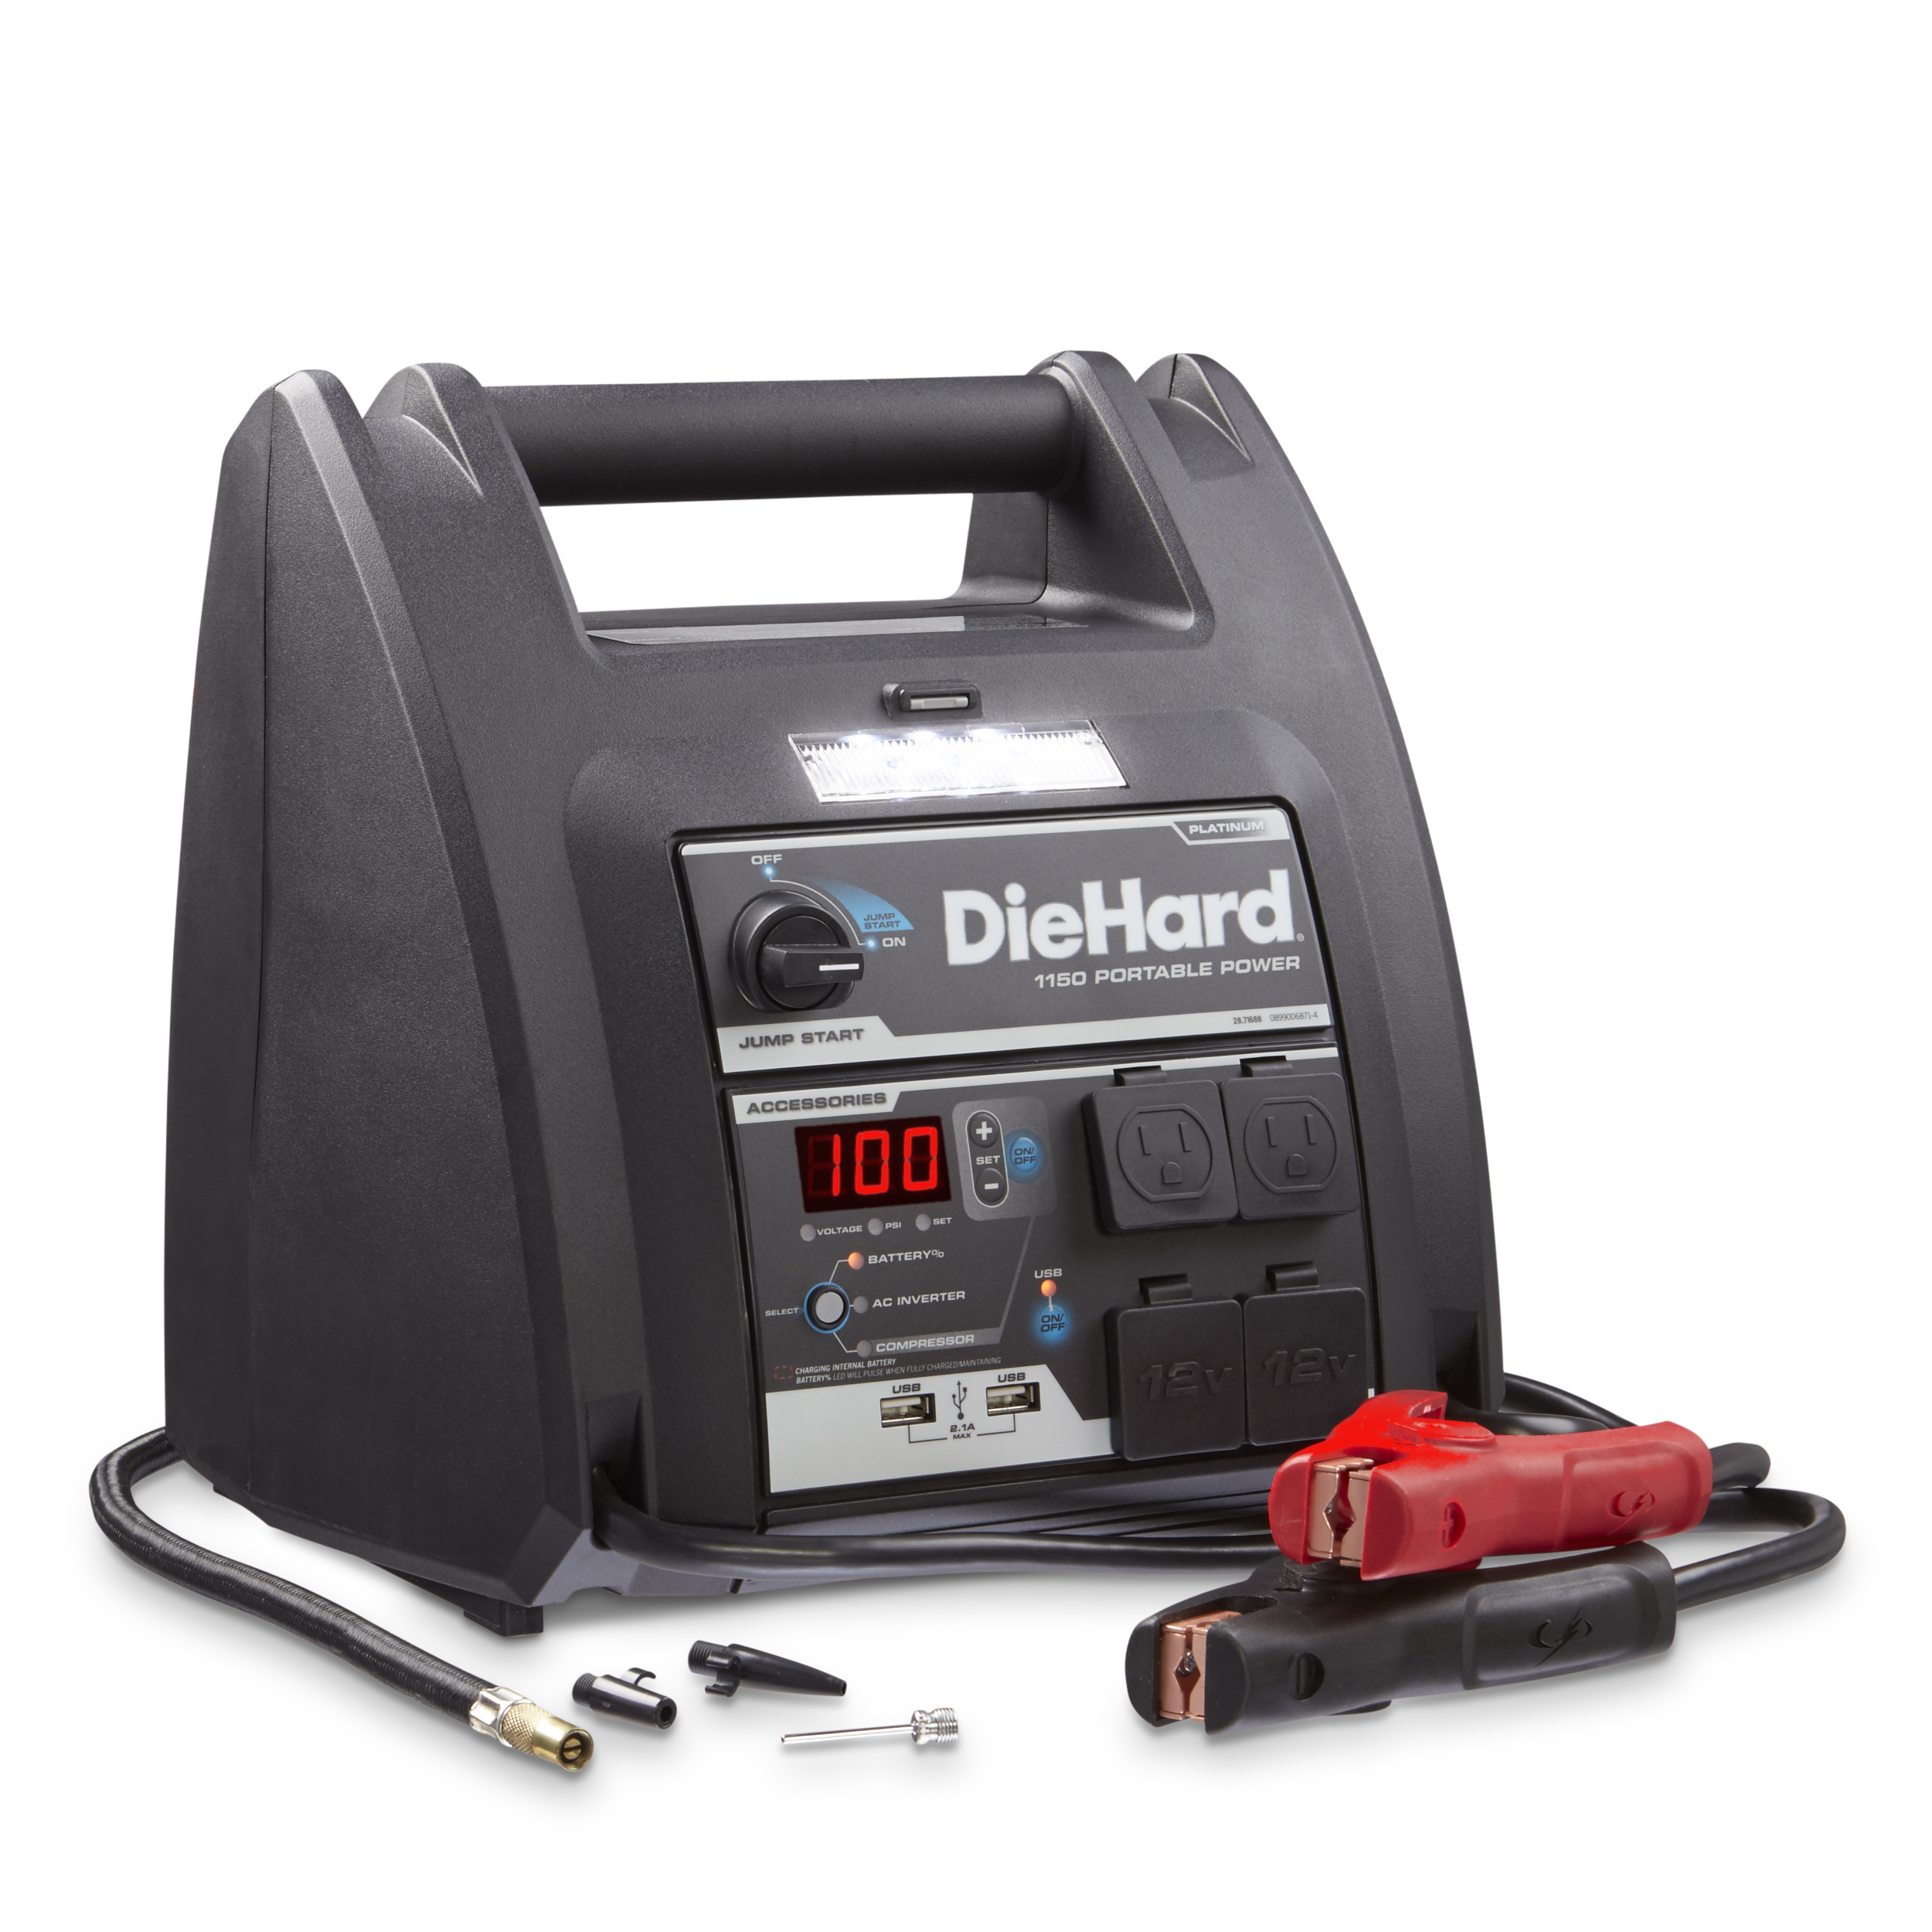 DieHard Platinum Portable Power 1150 | Shop Your Way: Online Shopping Diehard 1150 Portable Power Not Charging